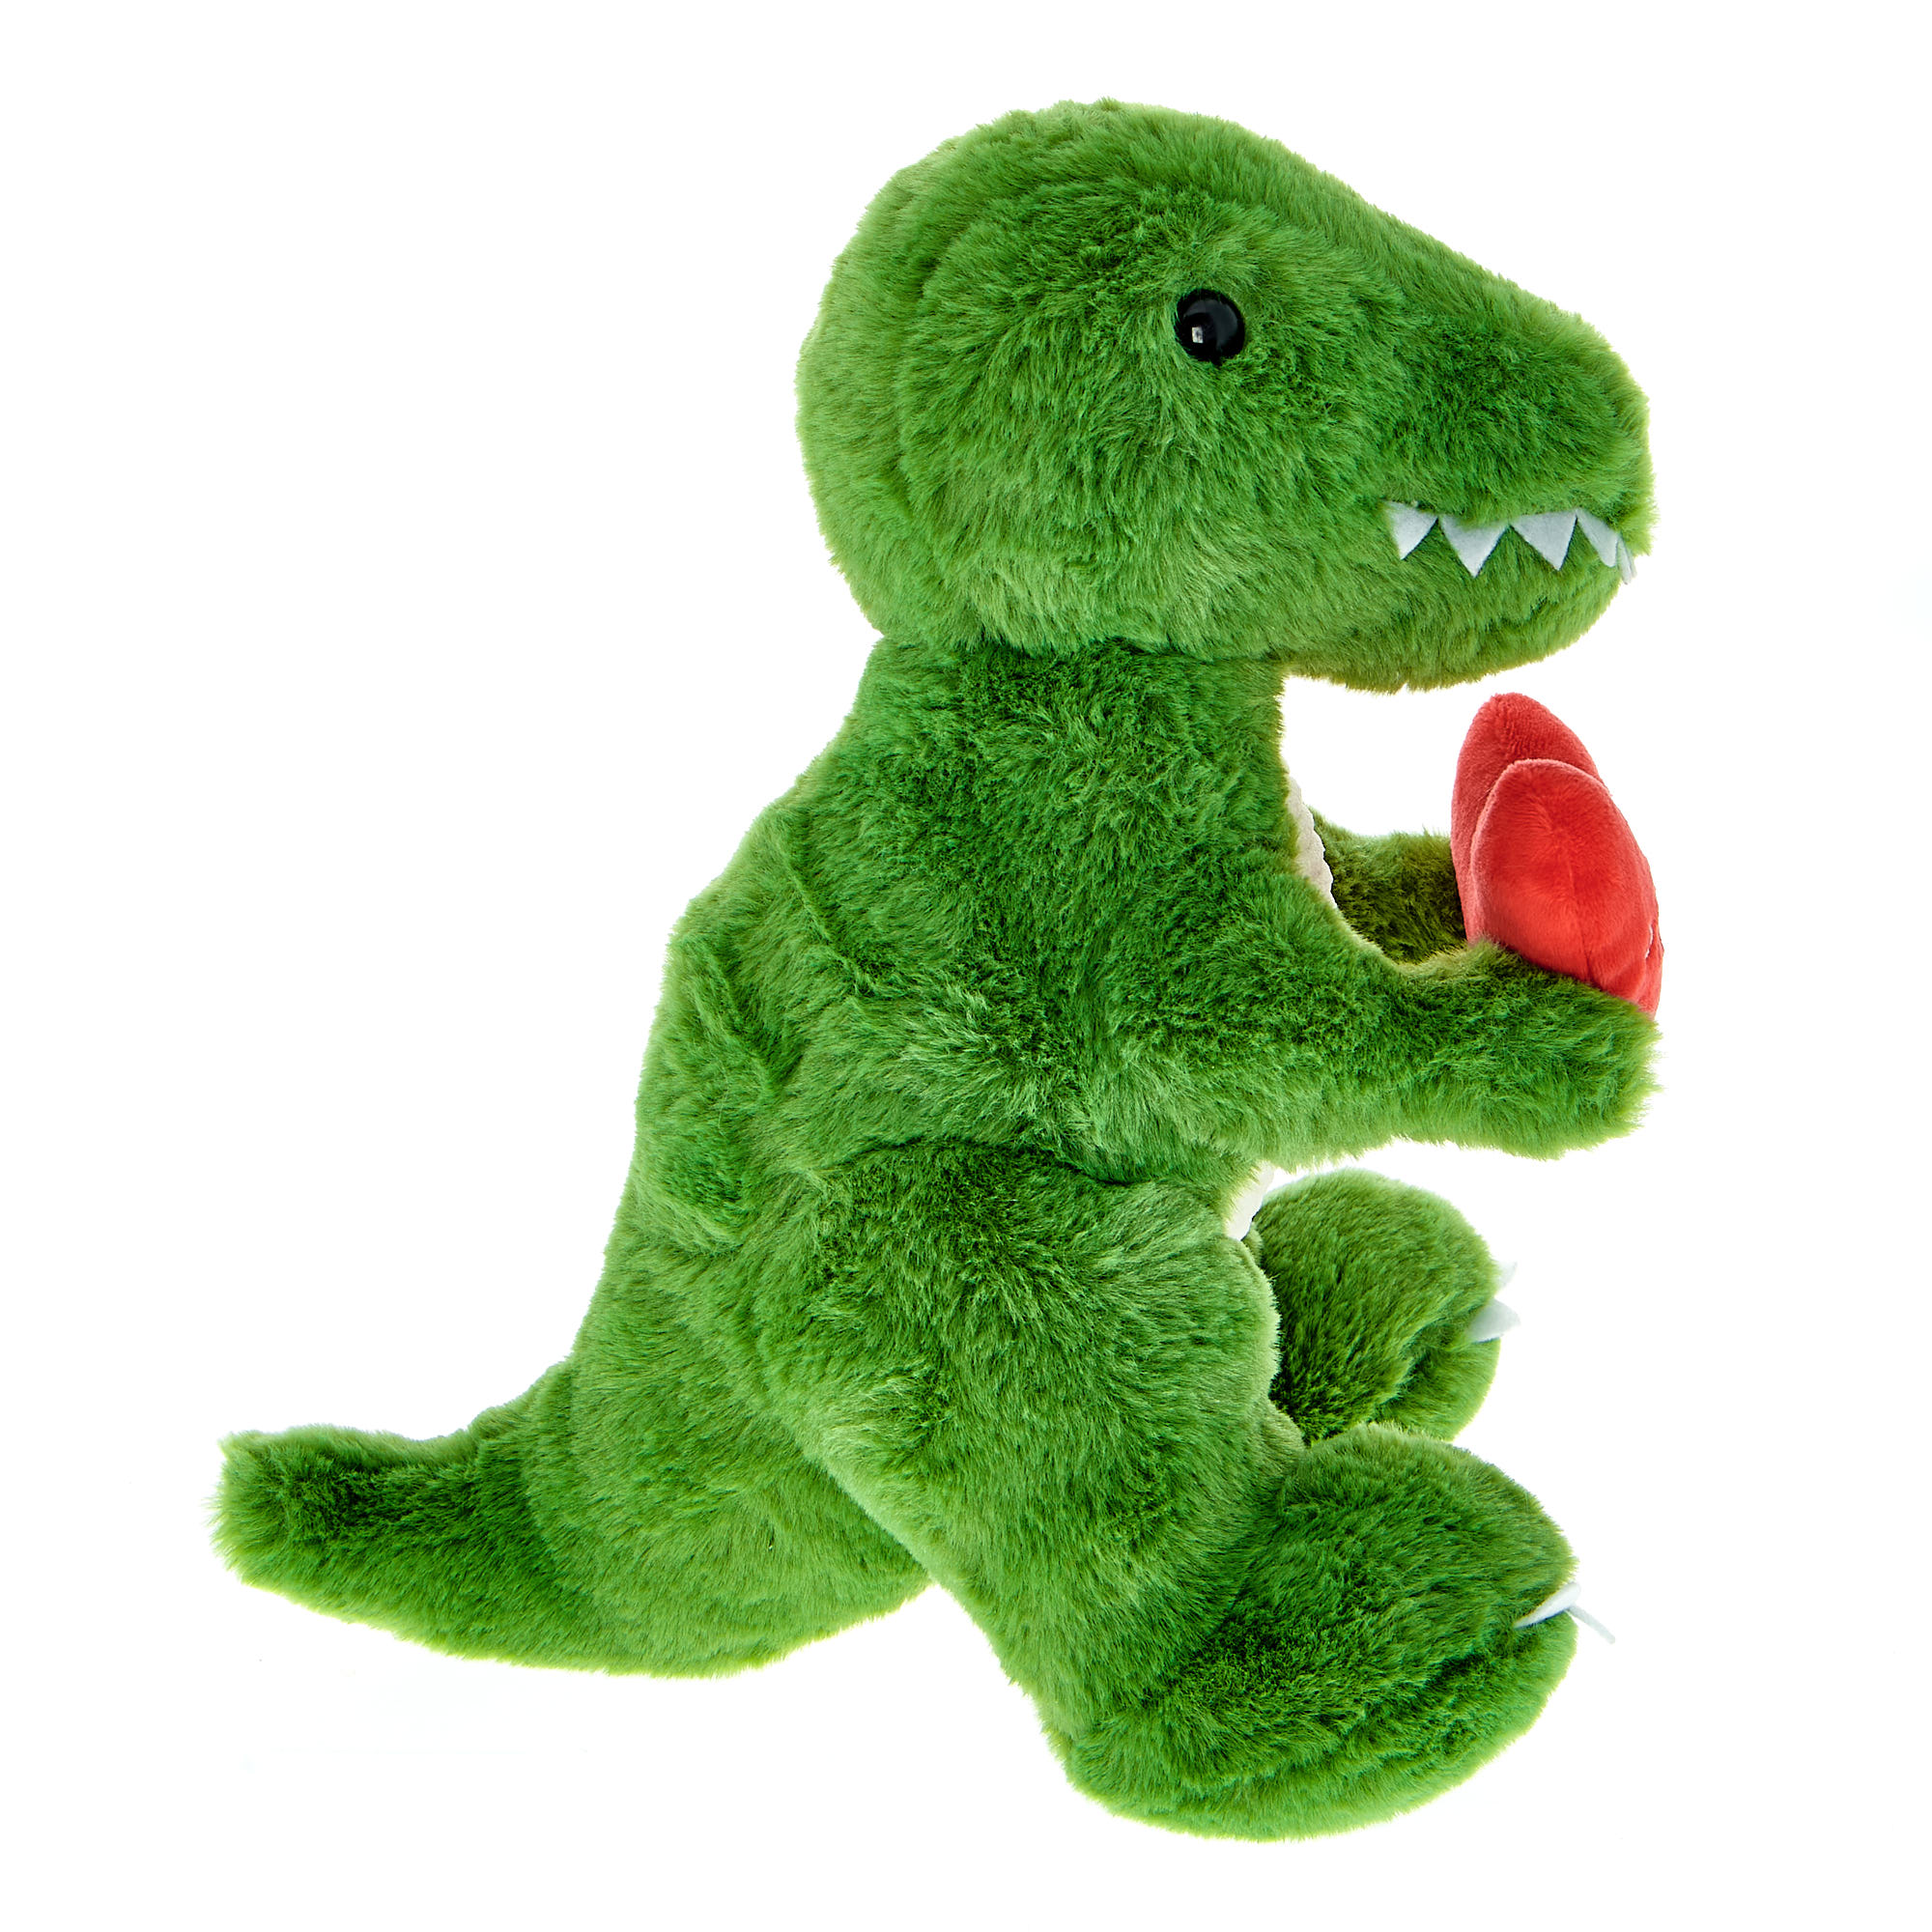 You're Dino-Mite Dinosaur Soft Toy